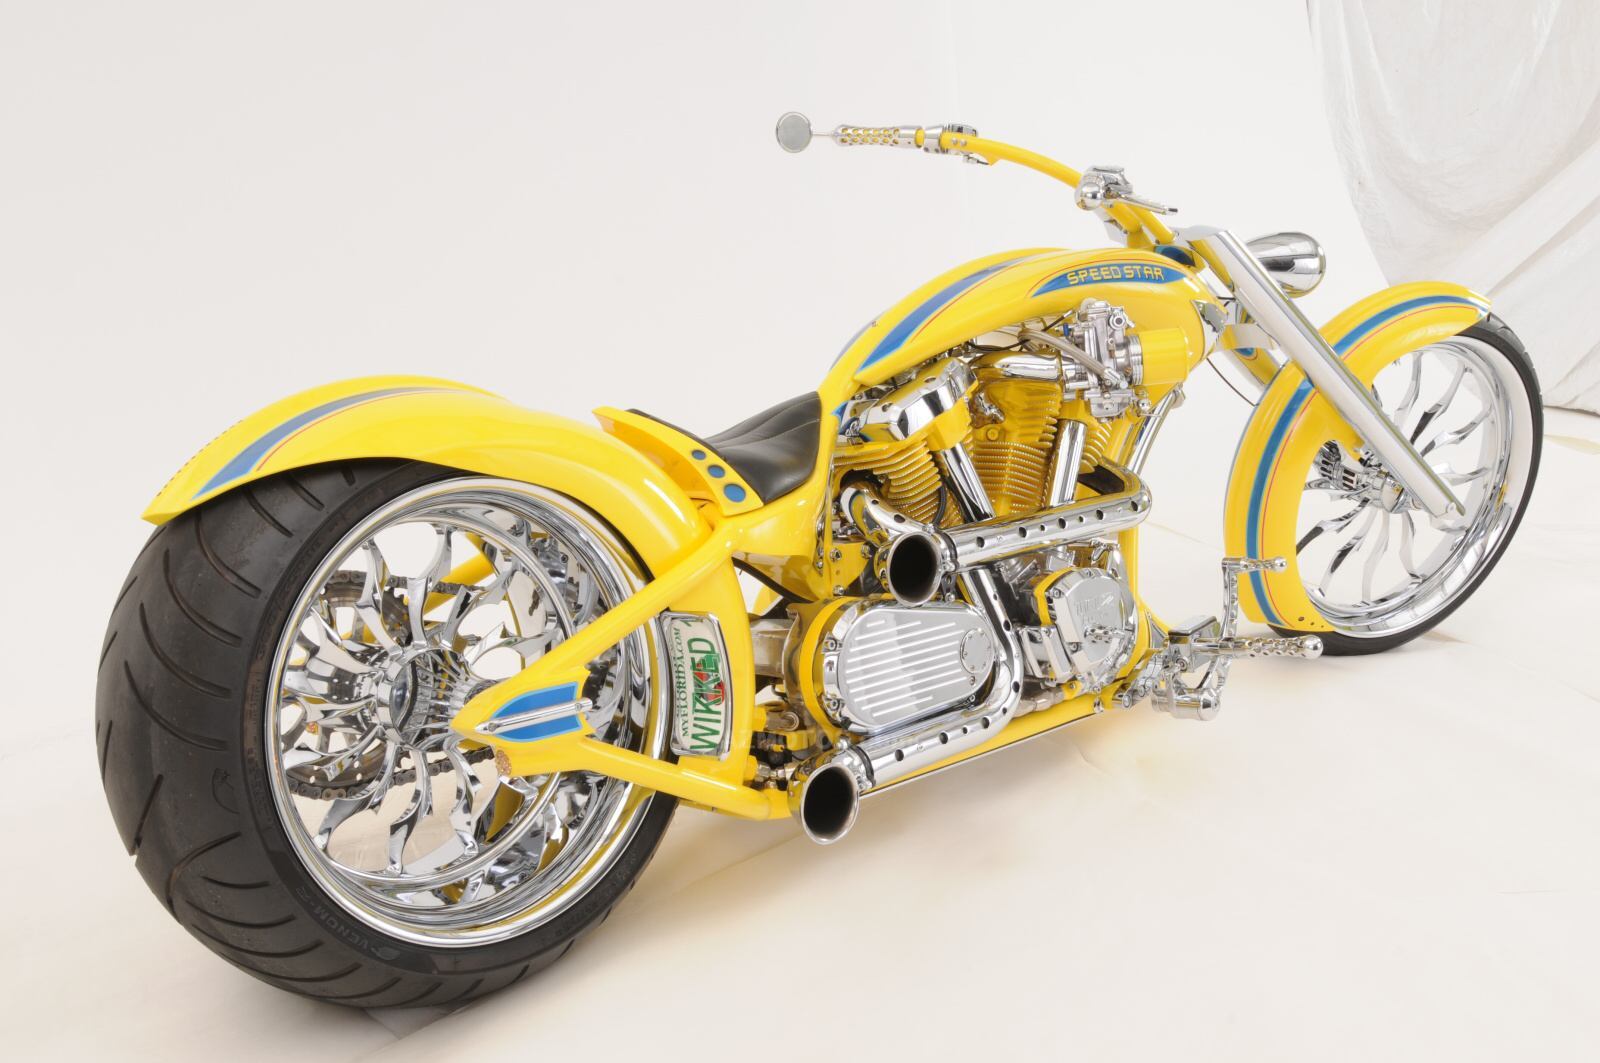 Fotos de motos custom tunning